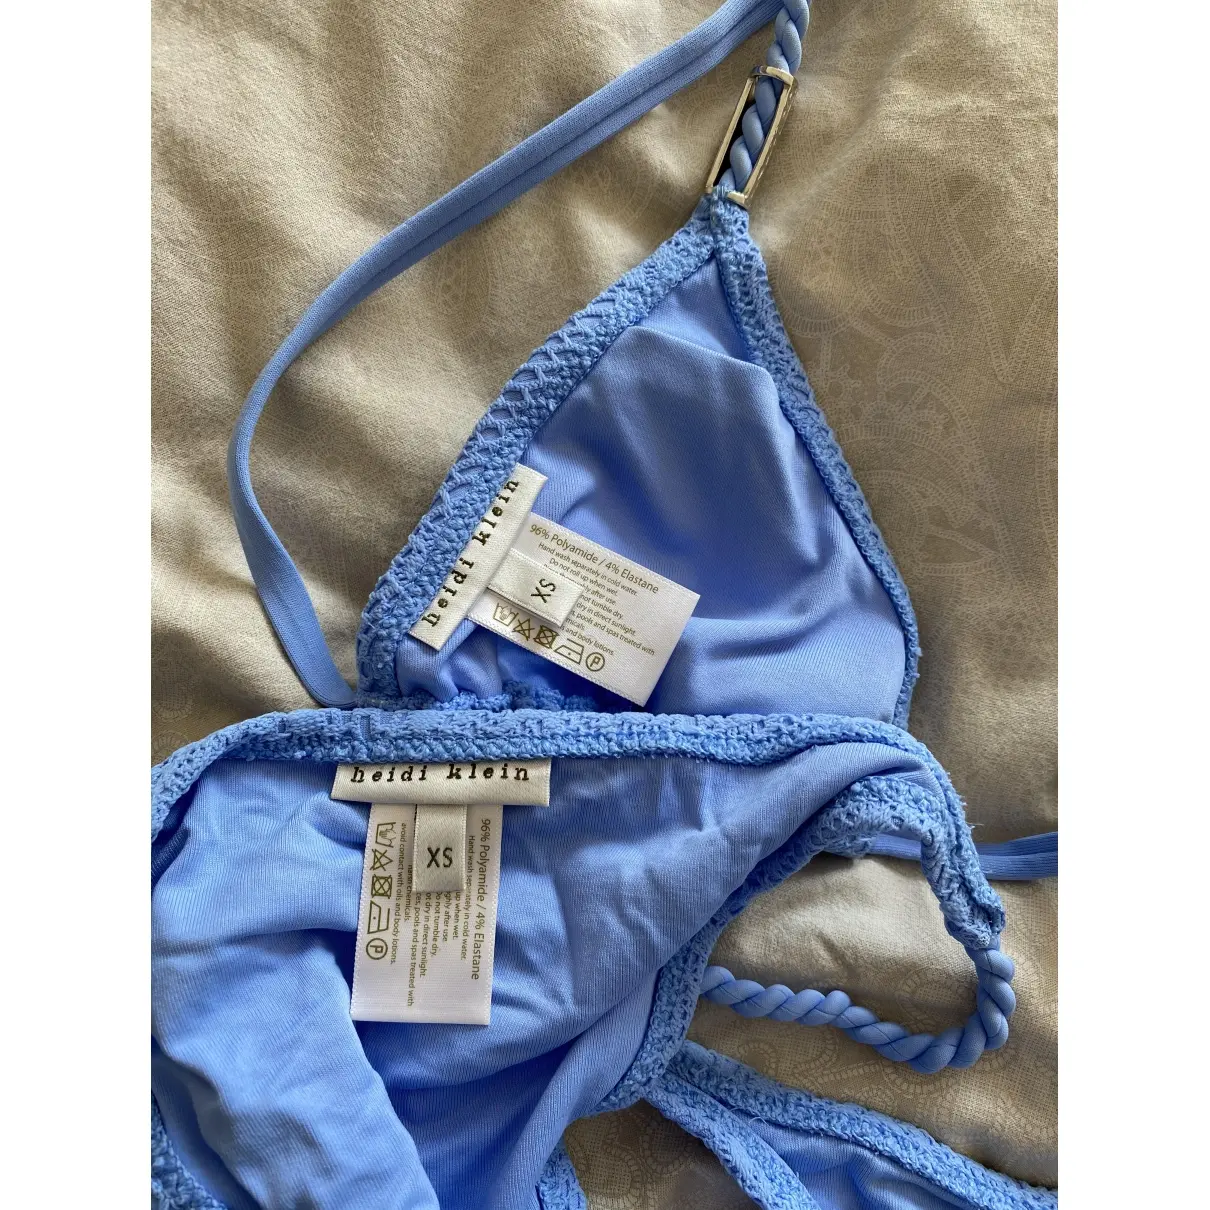 Buy Heidi Klein Two-piece swimsuit online